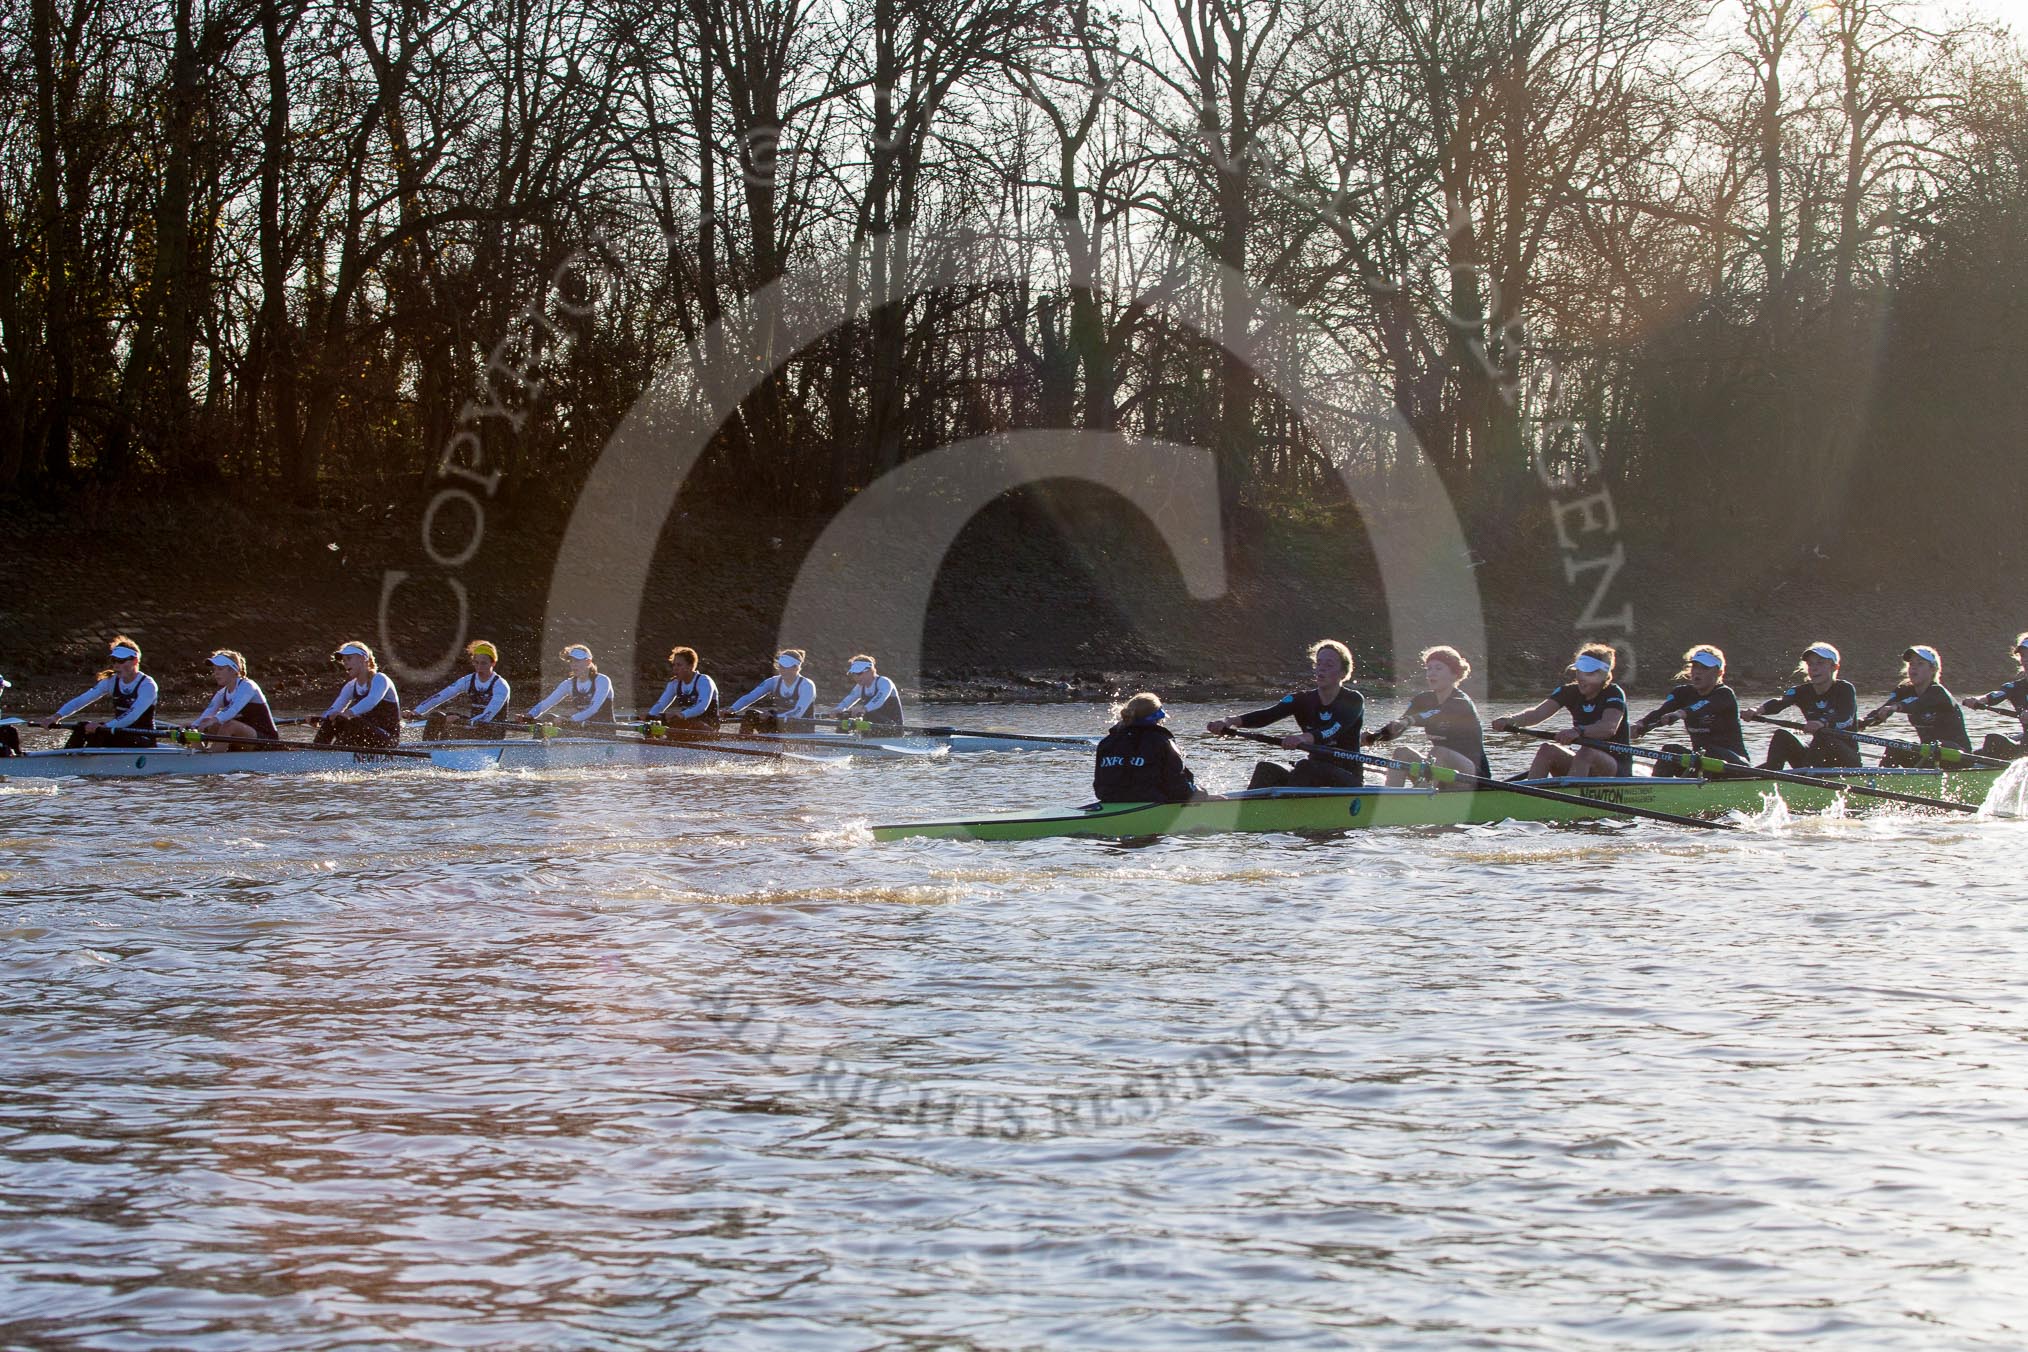 The Boat Race season 2014 - Women's Trial VIIIs (OUWBC, Oxford): Boudicca vs Cleopatra..
River Thames between Putney Bridge and Mortlake,
London SW15,

United Kingdom,
on 19 December 2013 at 12:55, image #159